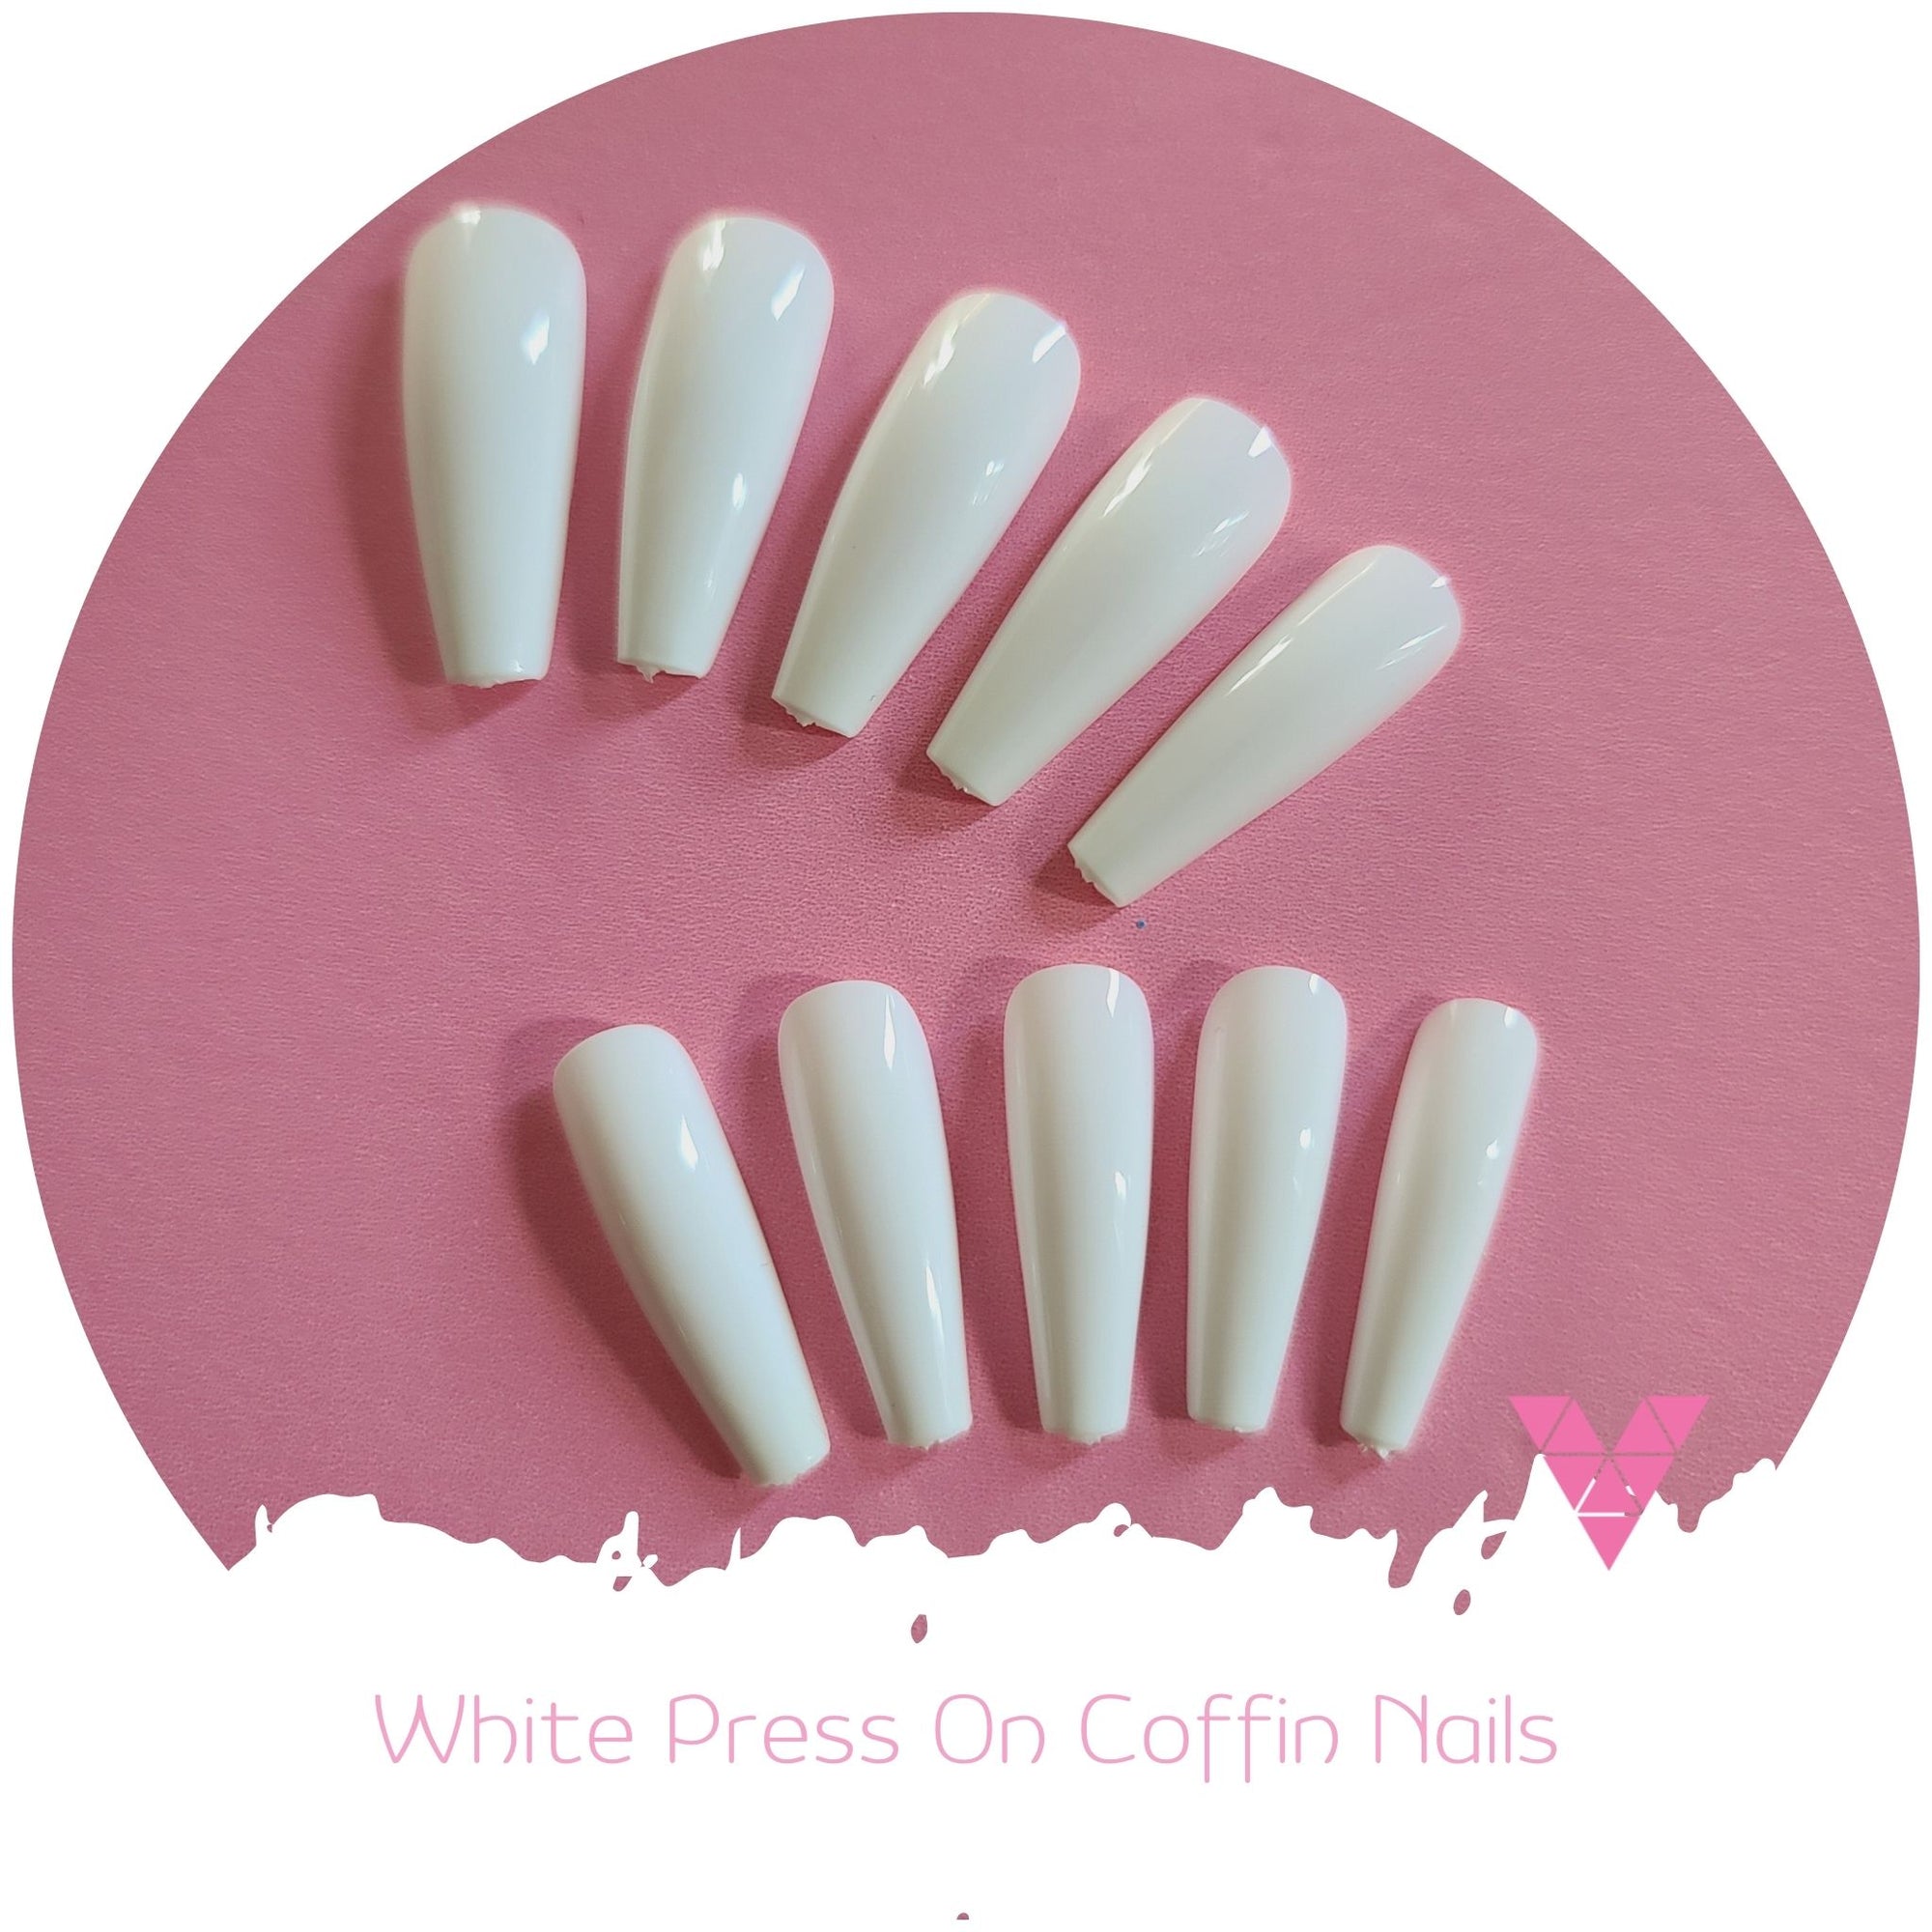 White Press On Coffin Nails